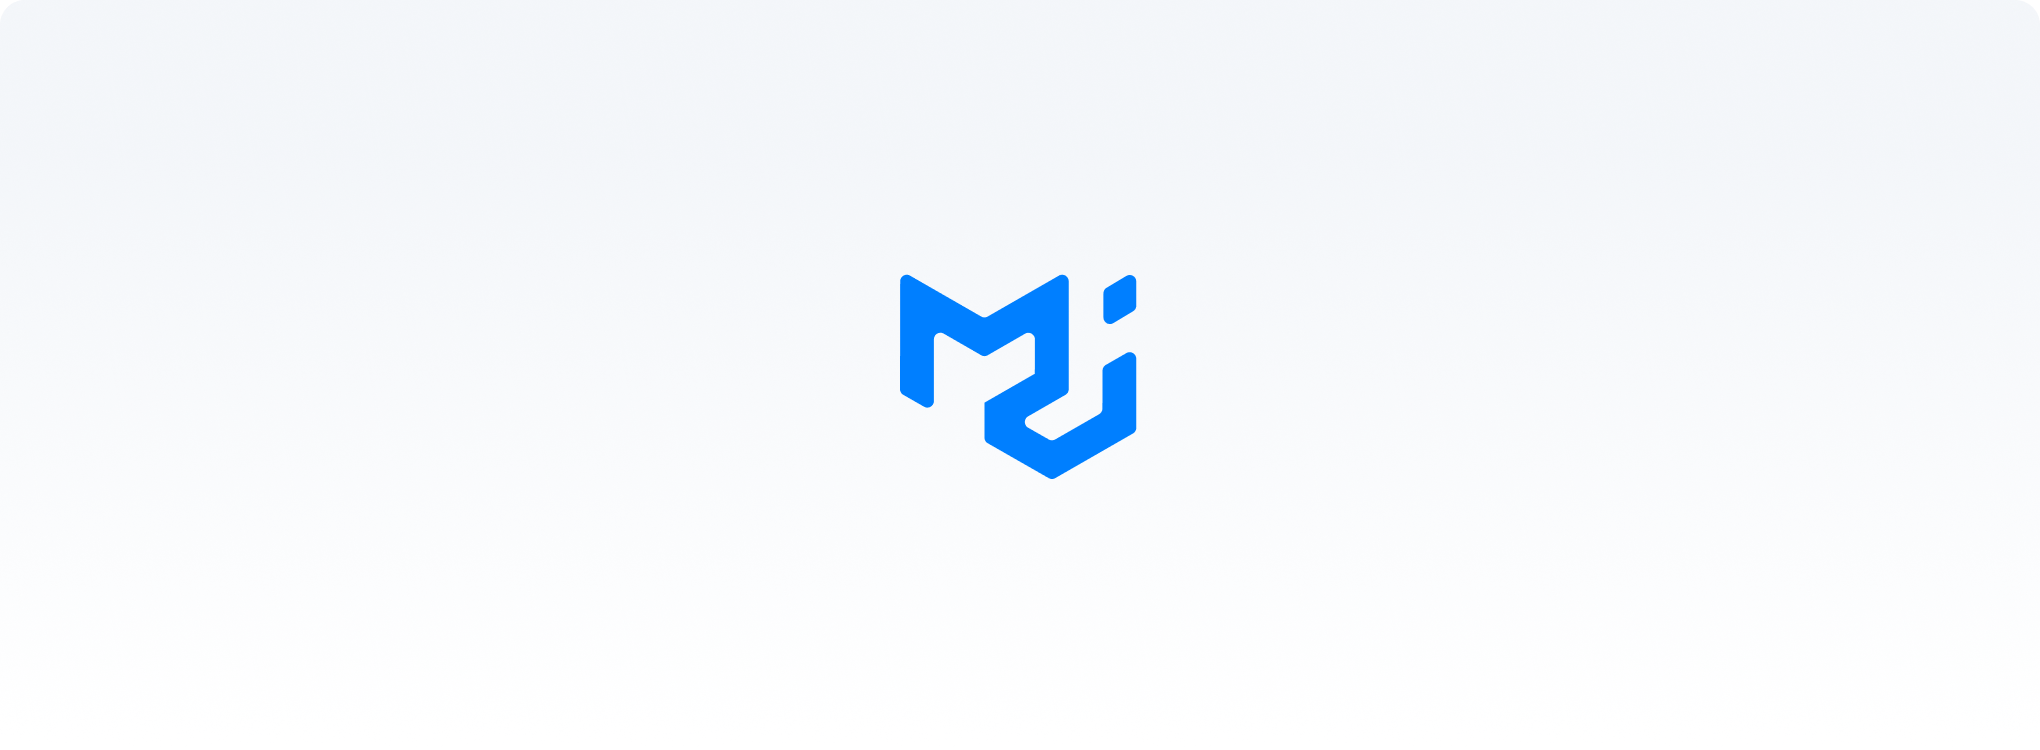 The new MUI logo